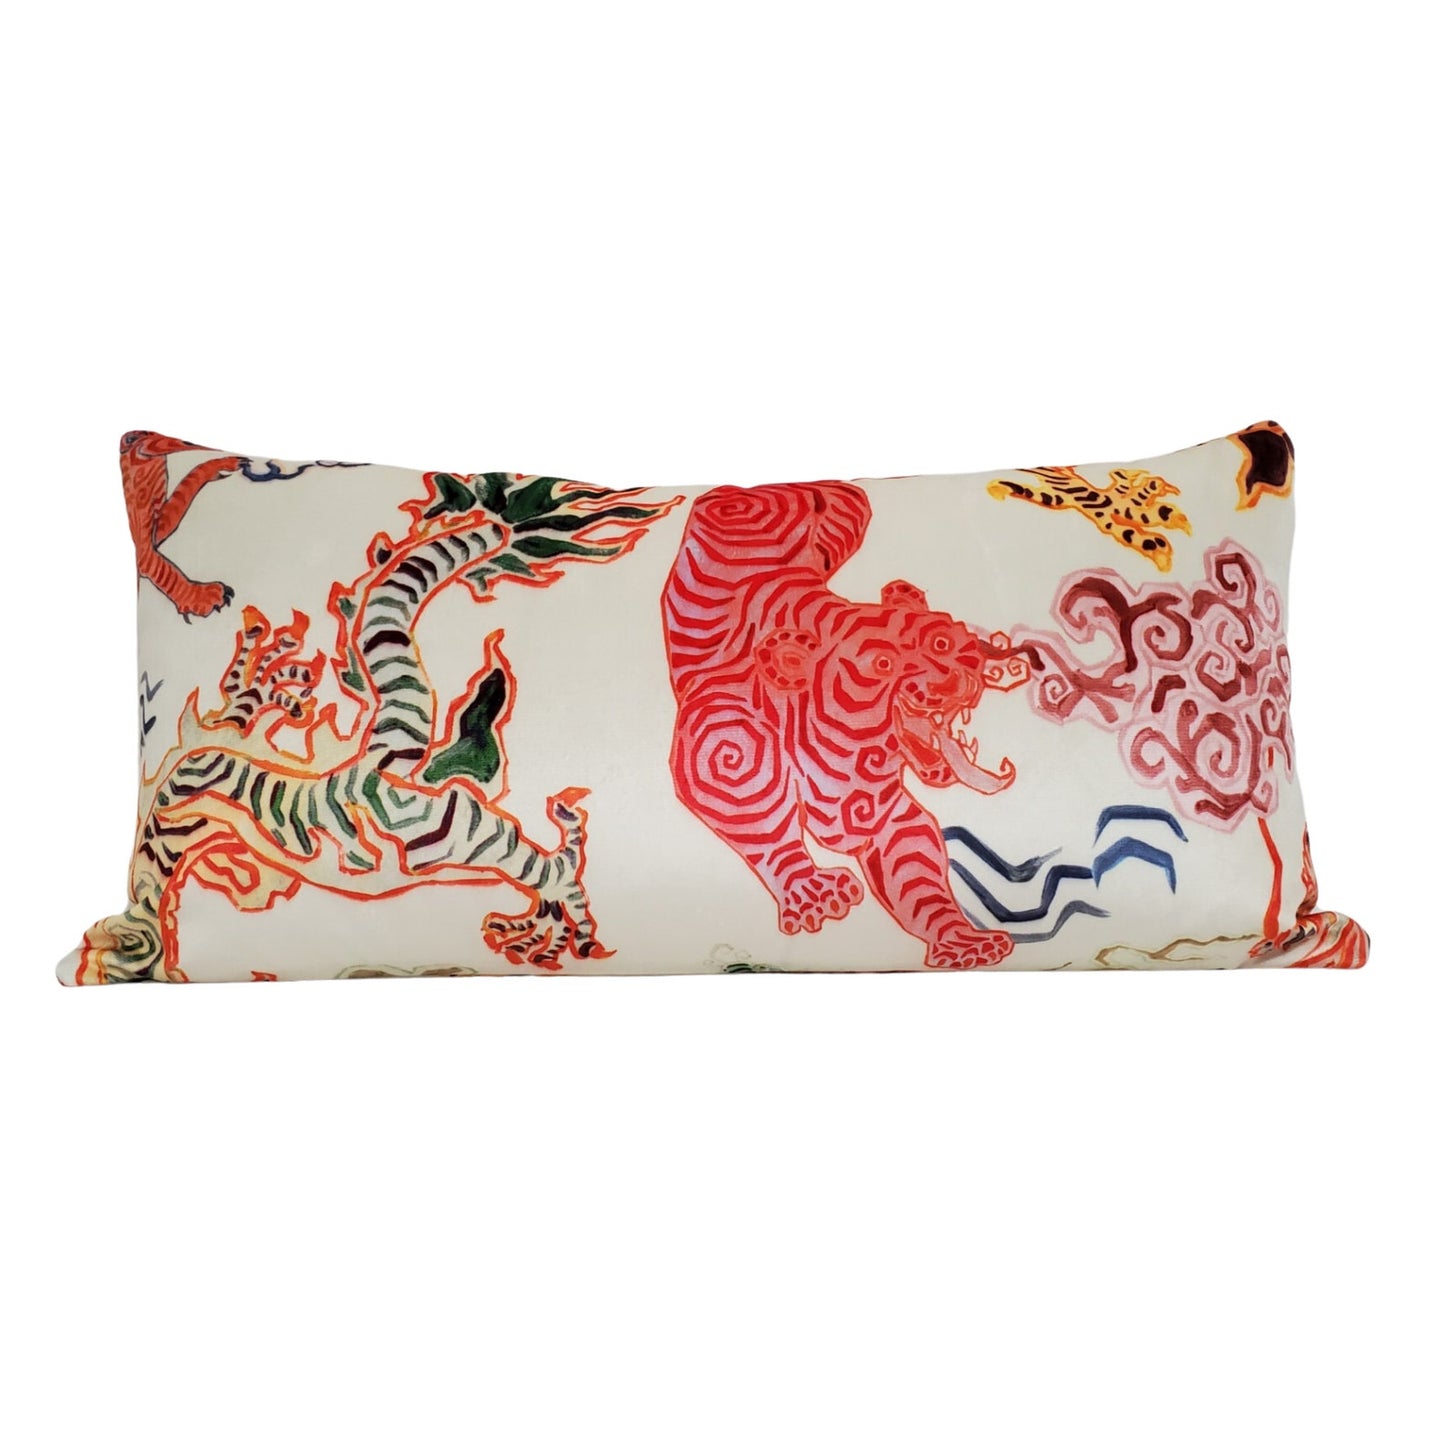 Modern Chinoiserie - Tibetan Tiger and Asian Dragon Velvet Pillow Cover - Available in Bolster, Lumbar, Throw, Euro Sham Sizes